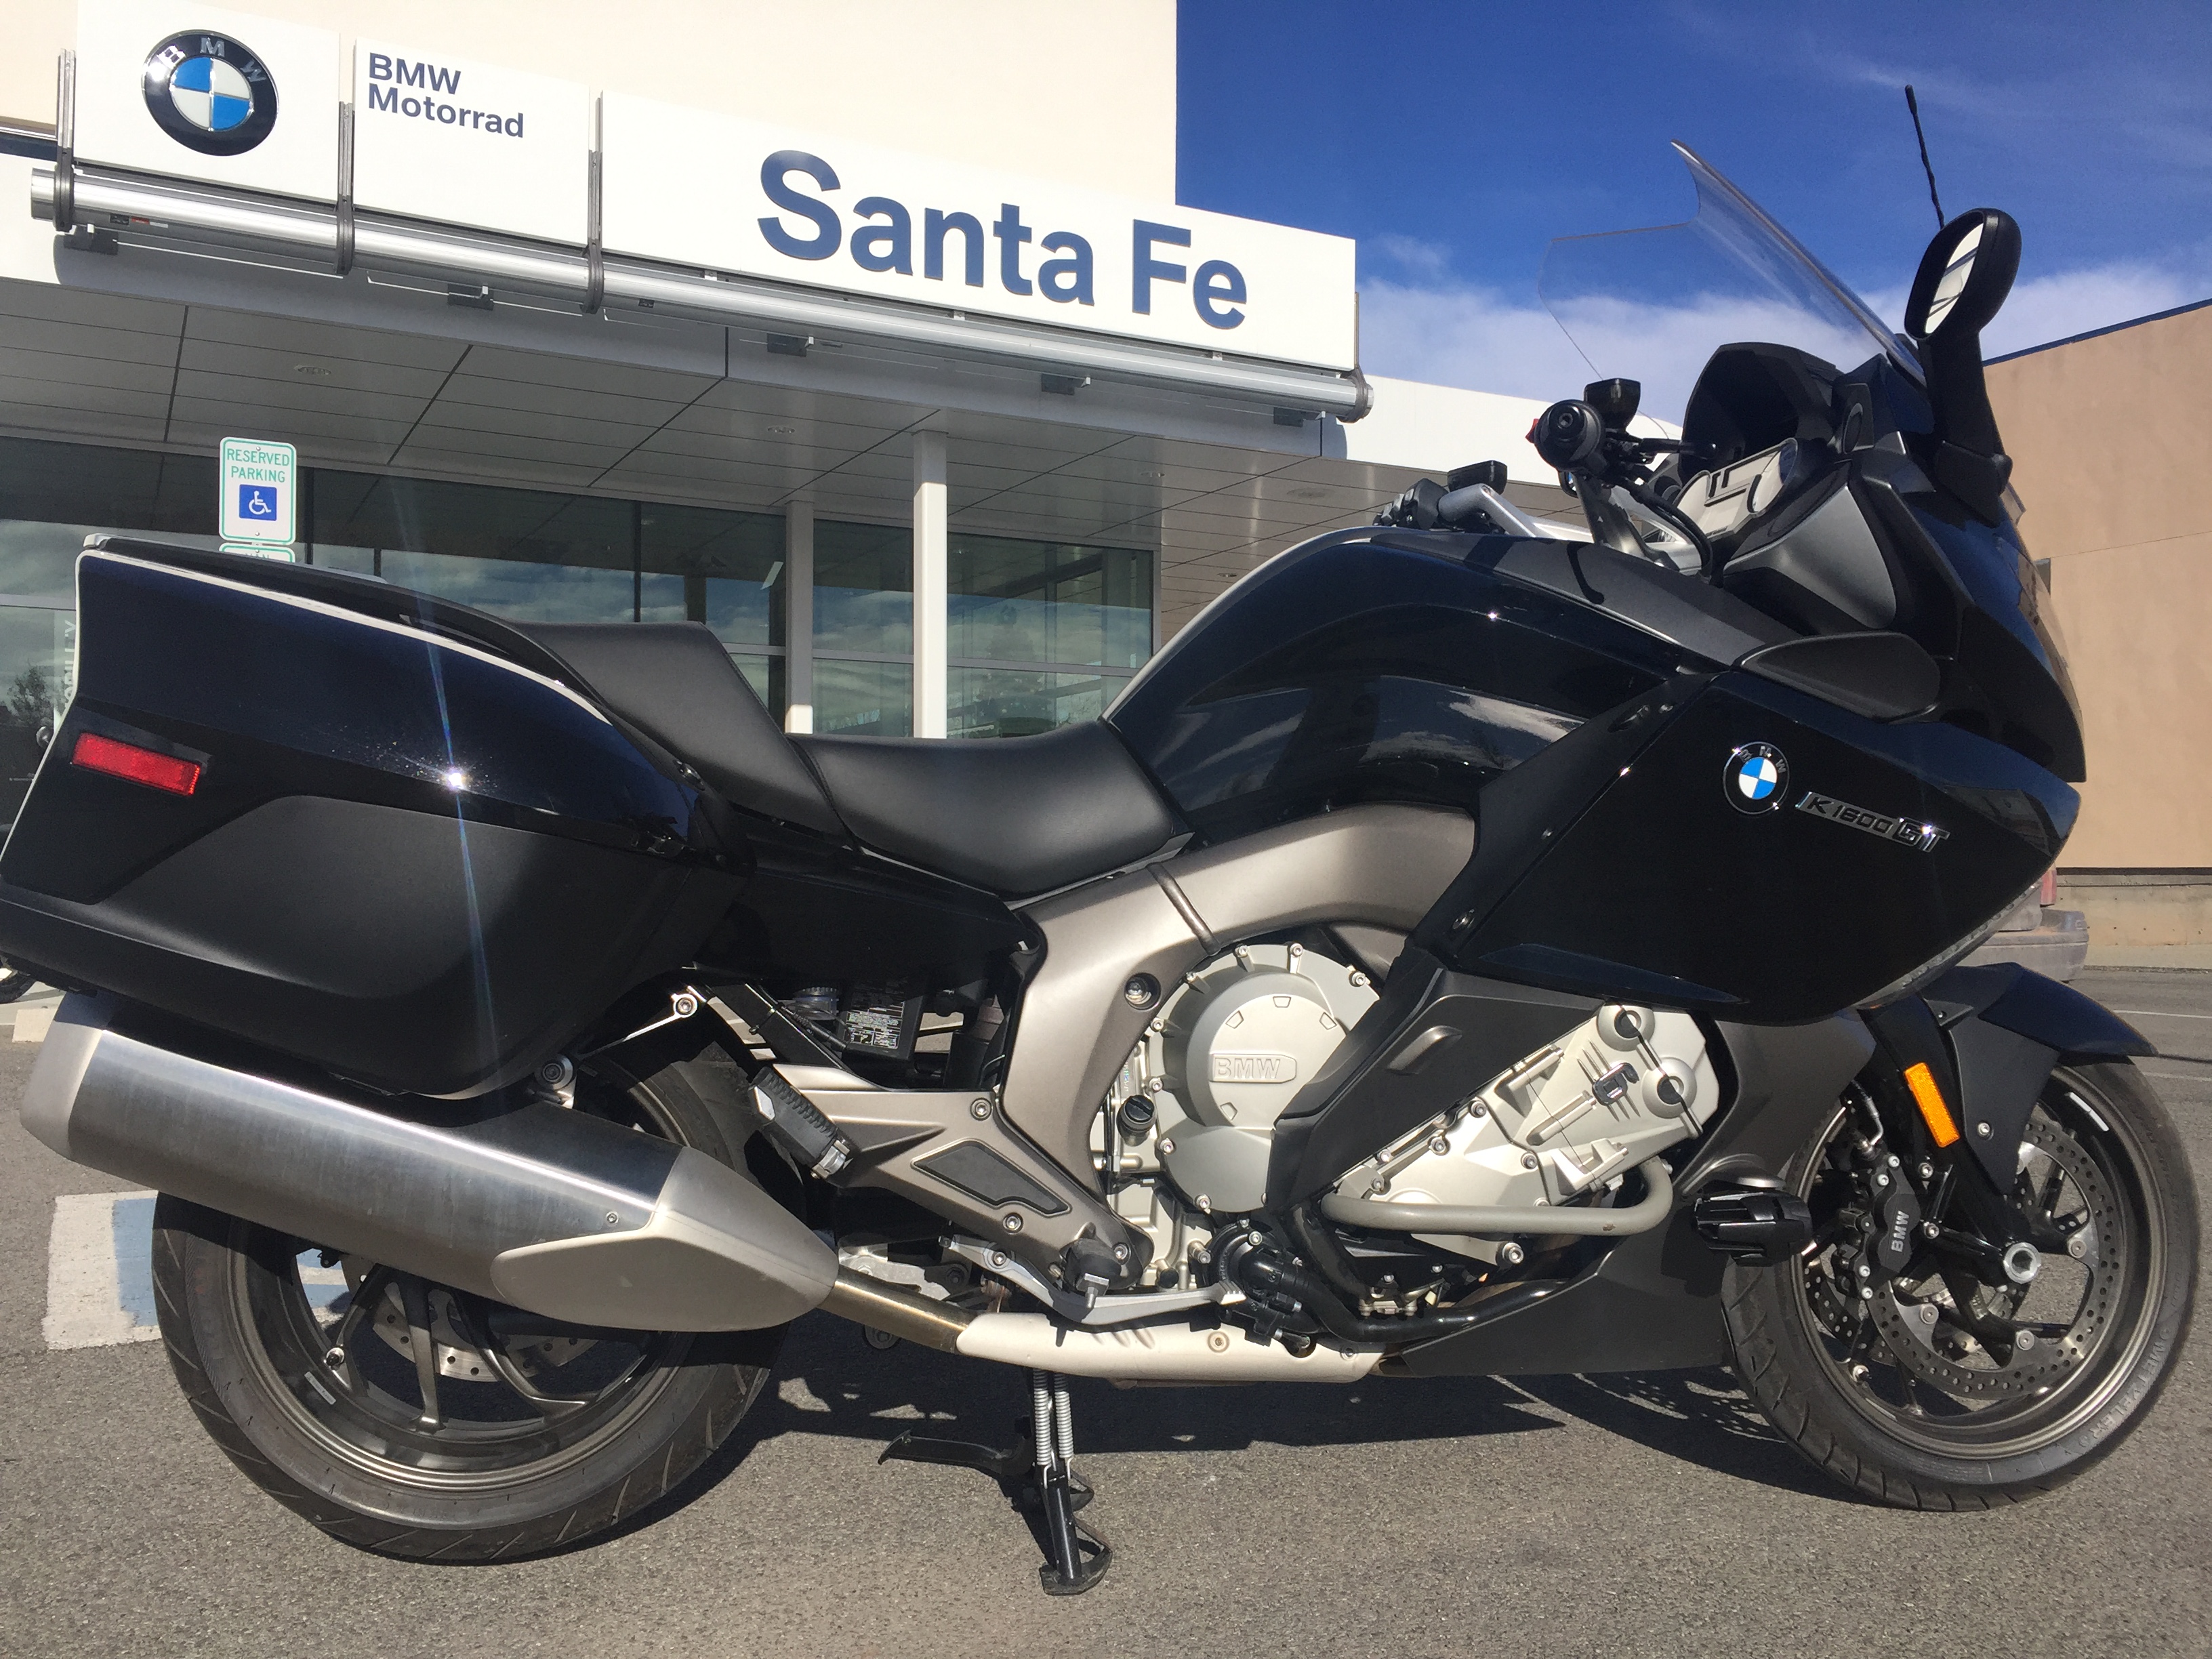 Pre-Owned Motorcycle Inventory - K1600GT - Santa Fe BMW Motorcycles